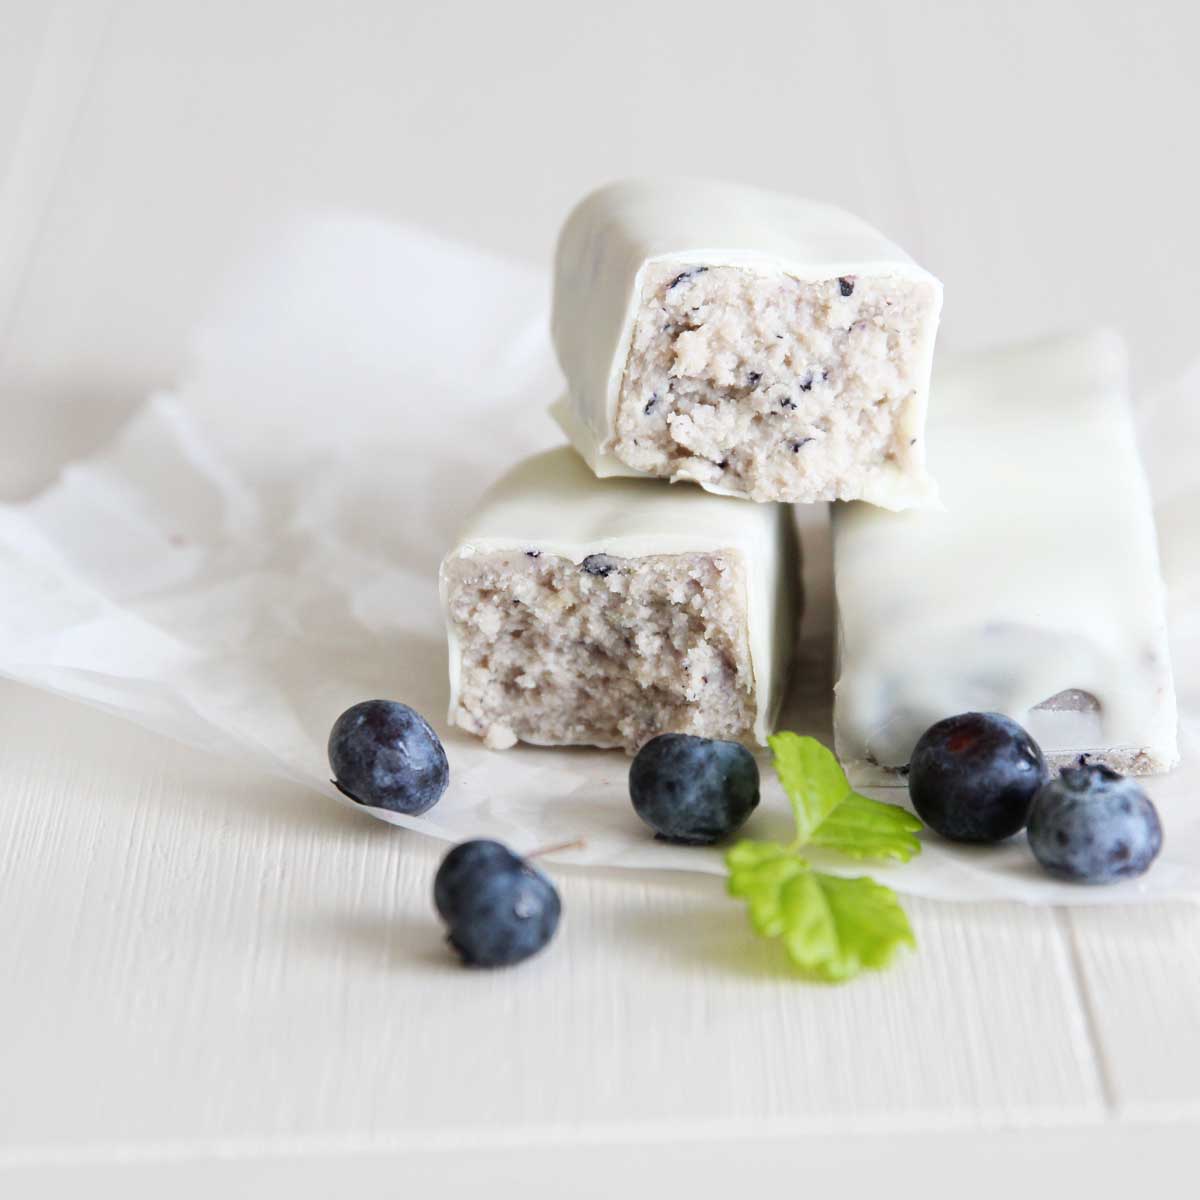 Homemade Blueberry Oatmeal Protein Bars (Healthy, Wholesome Vegan Recipe!) - Blueberry Oatmeal Protein Bars